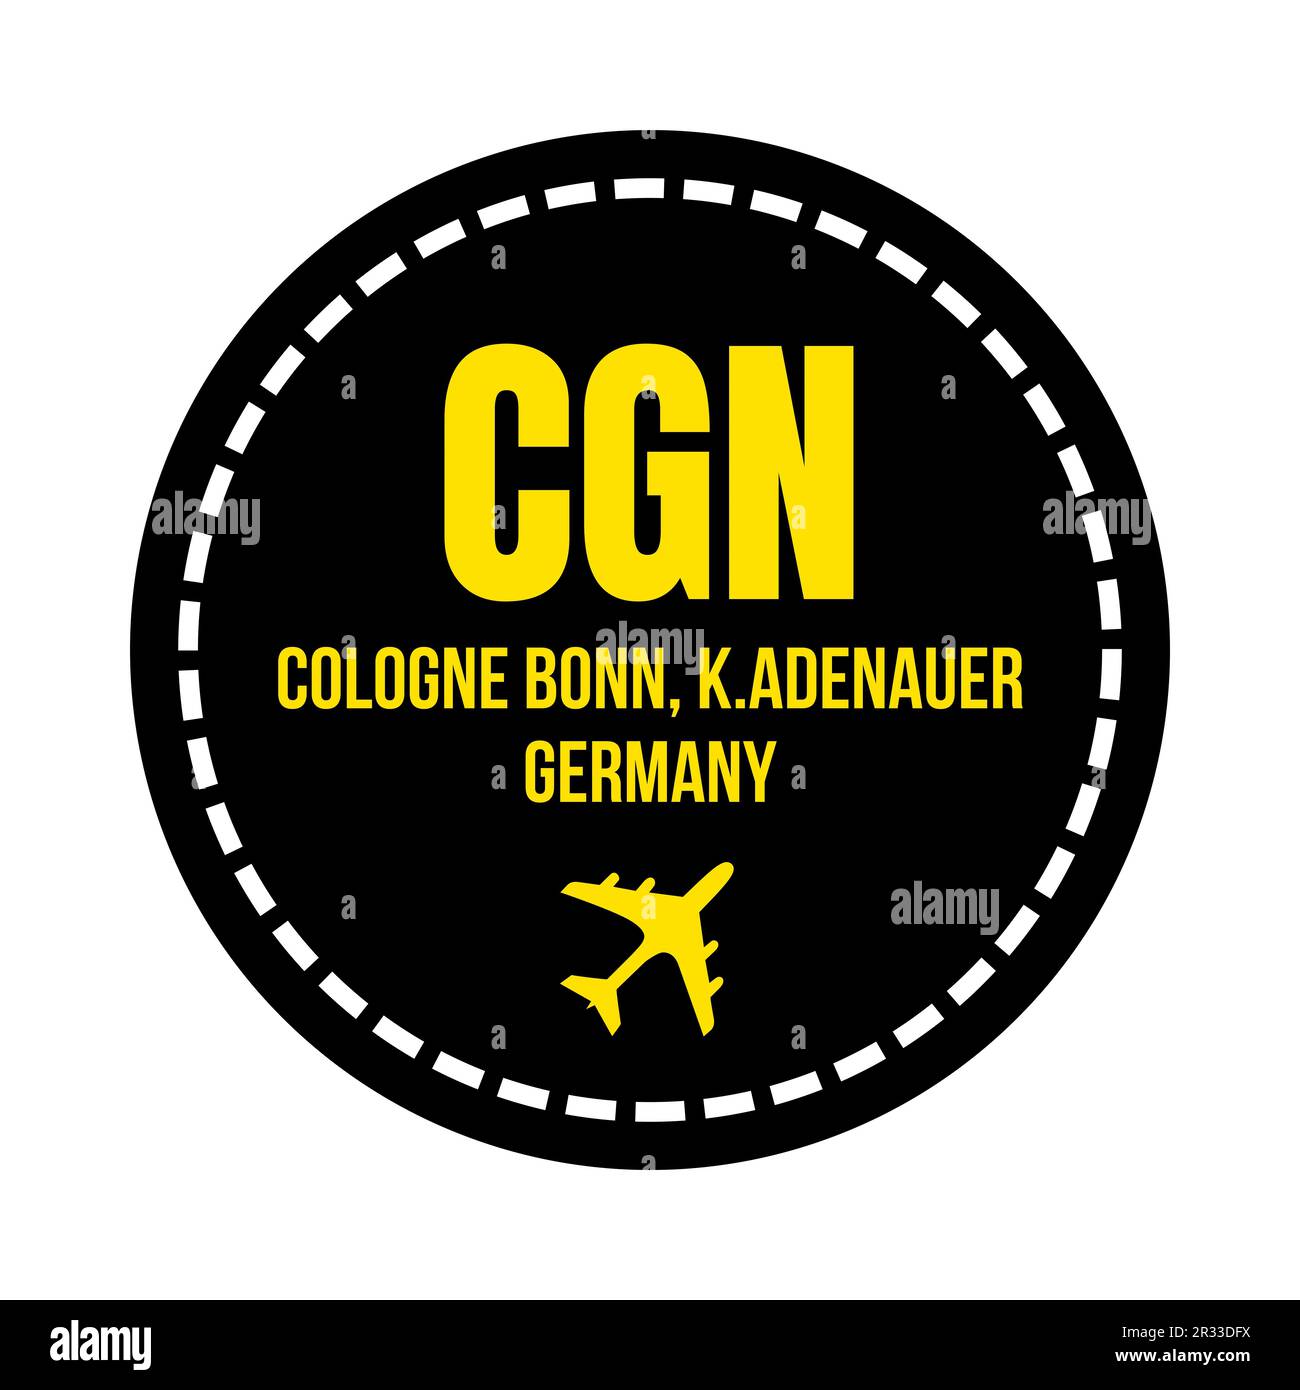 CGN Cologne Bonn airport symbol icon Stock Photo